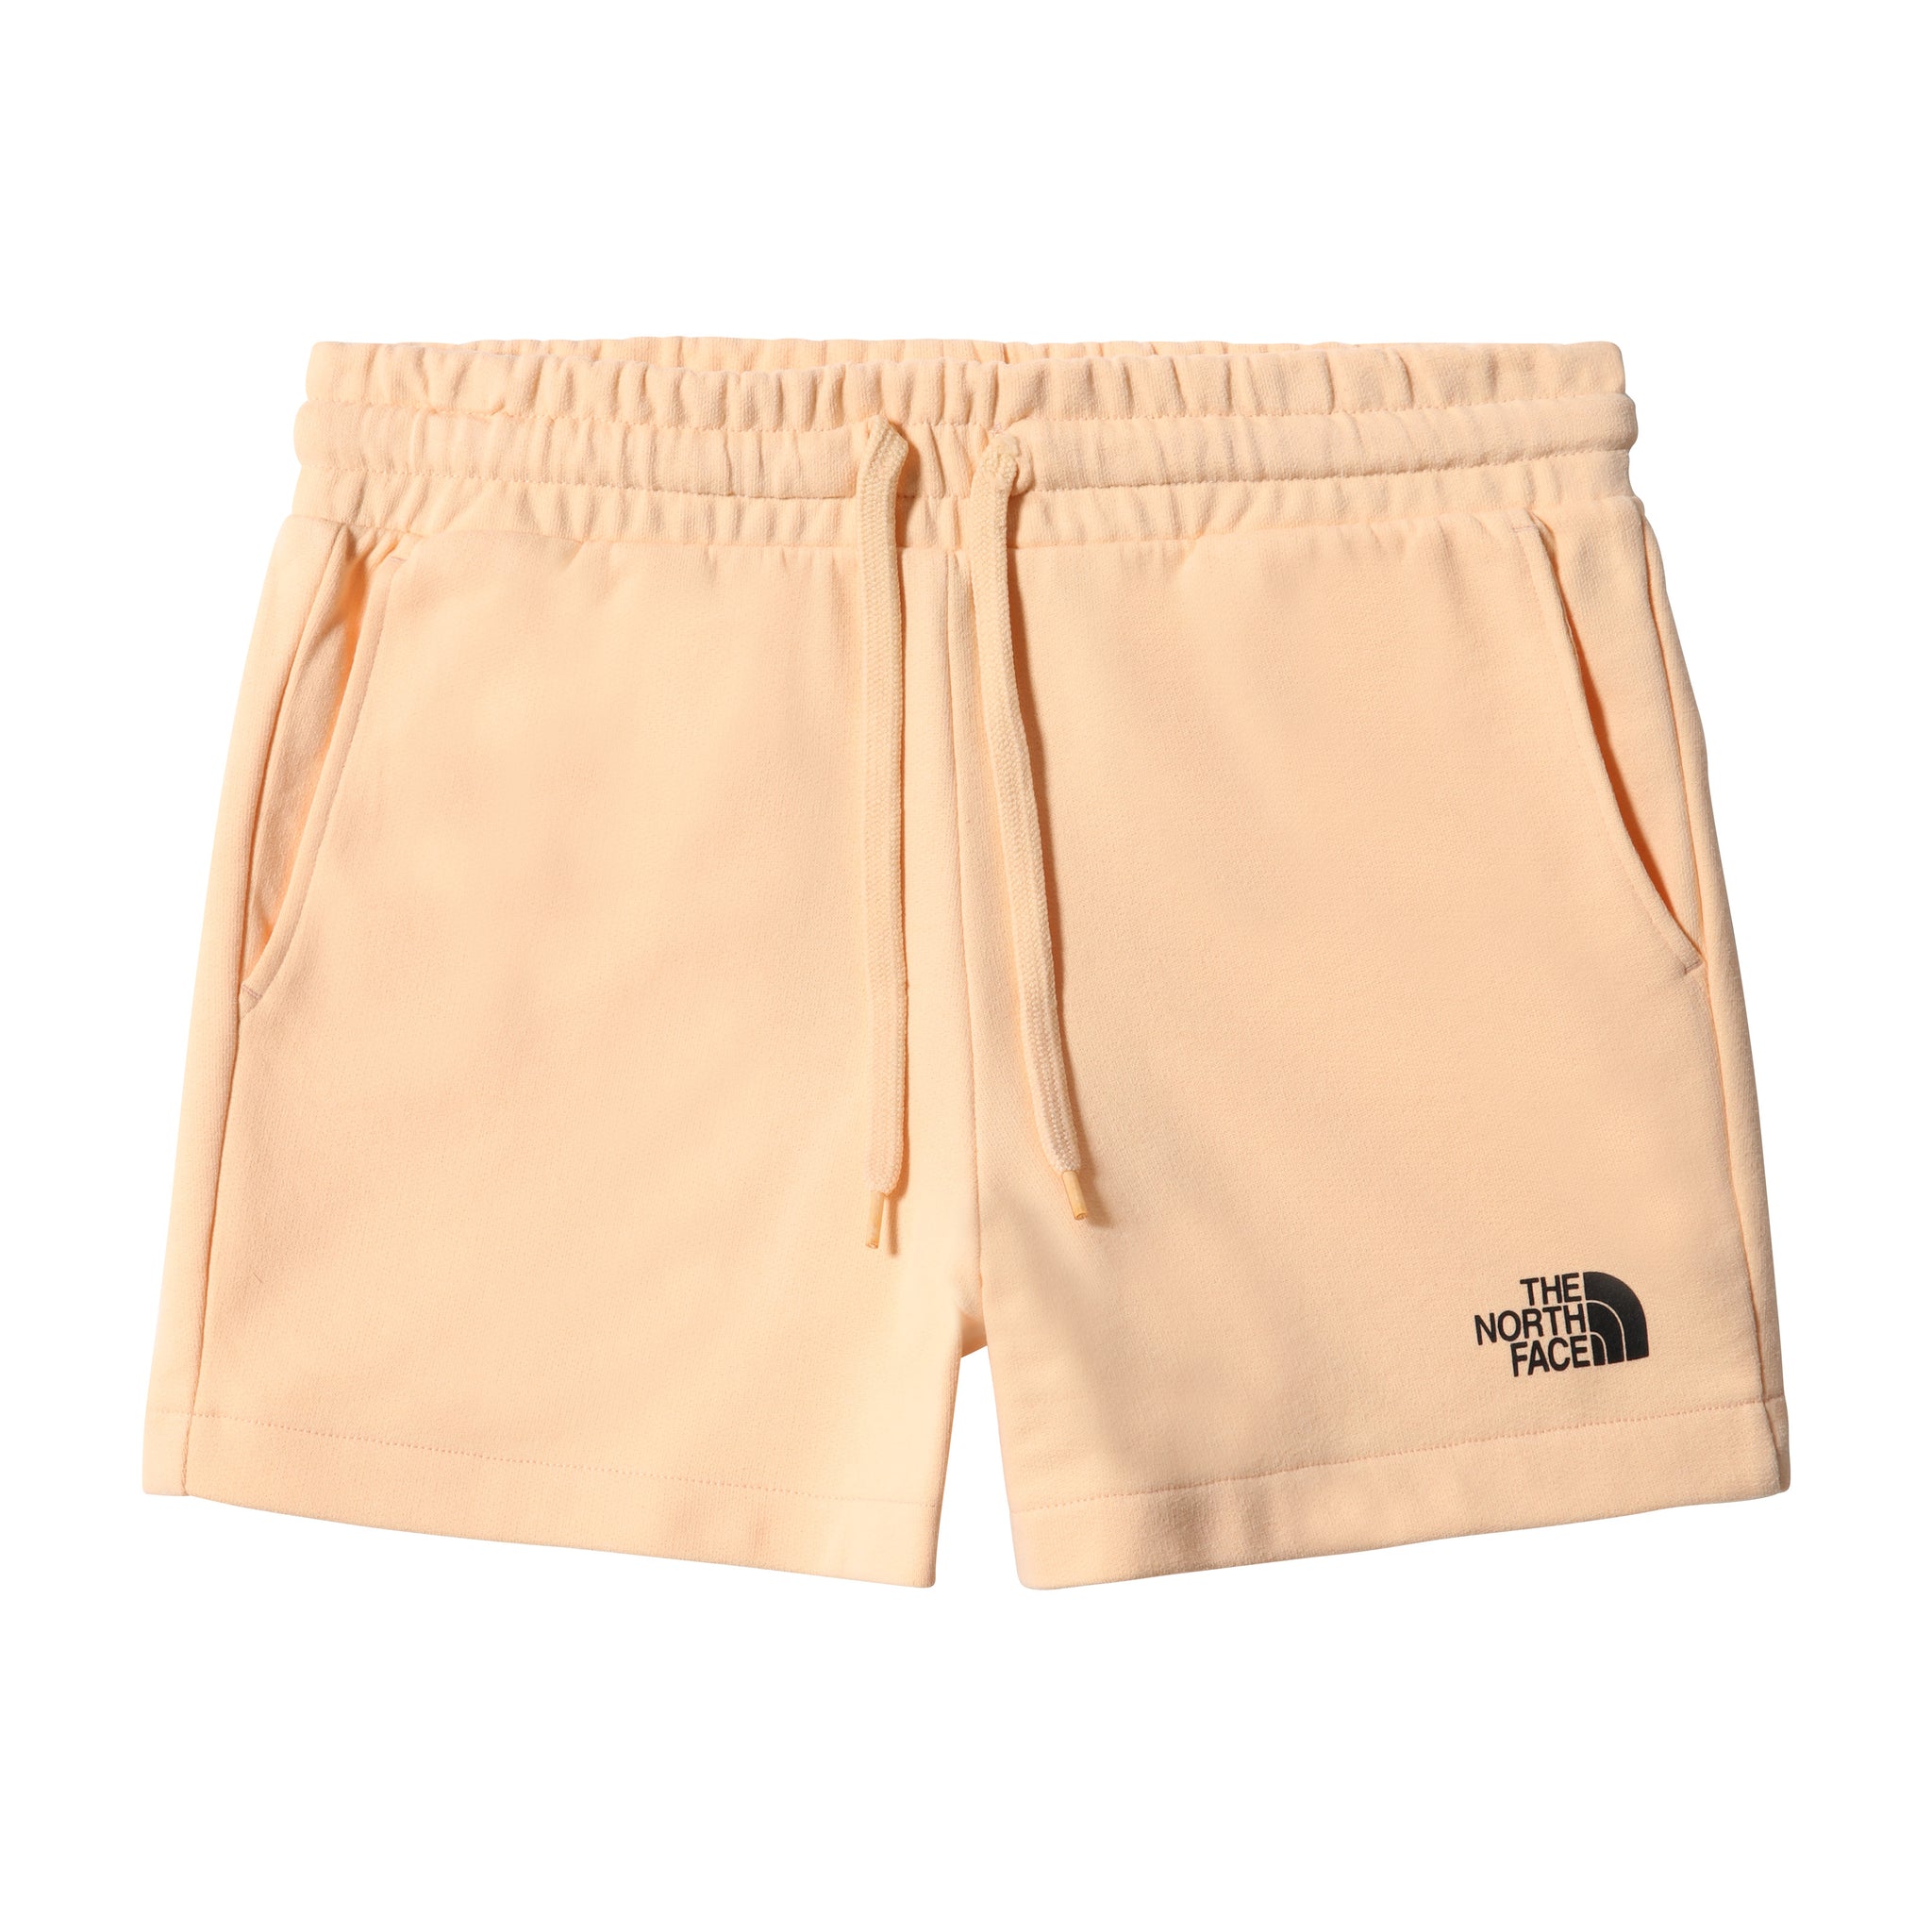 Shorts The North Face / Pesca - Ideal Moda